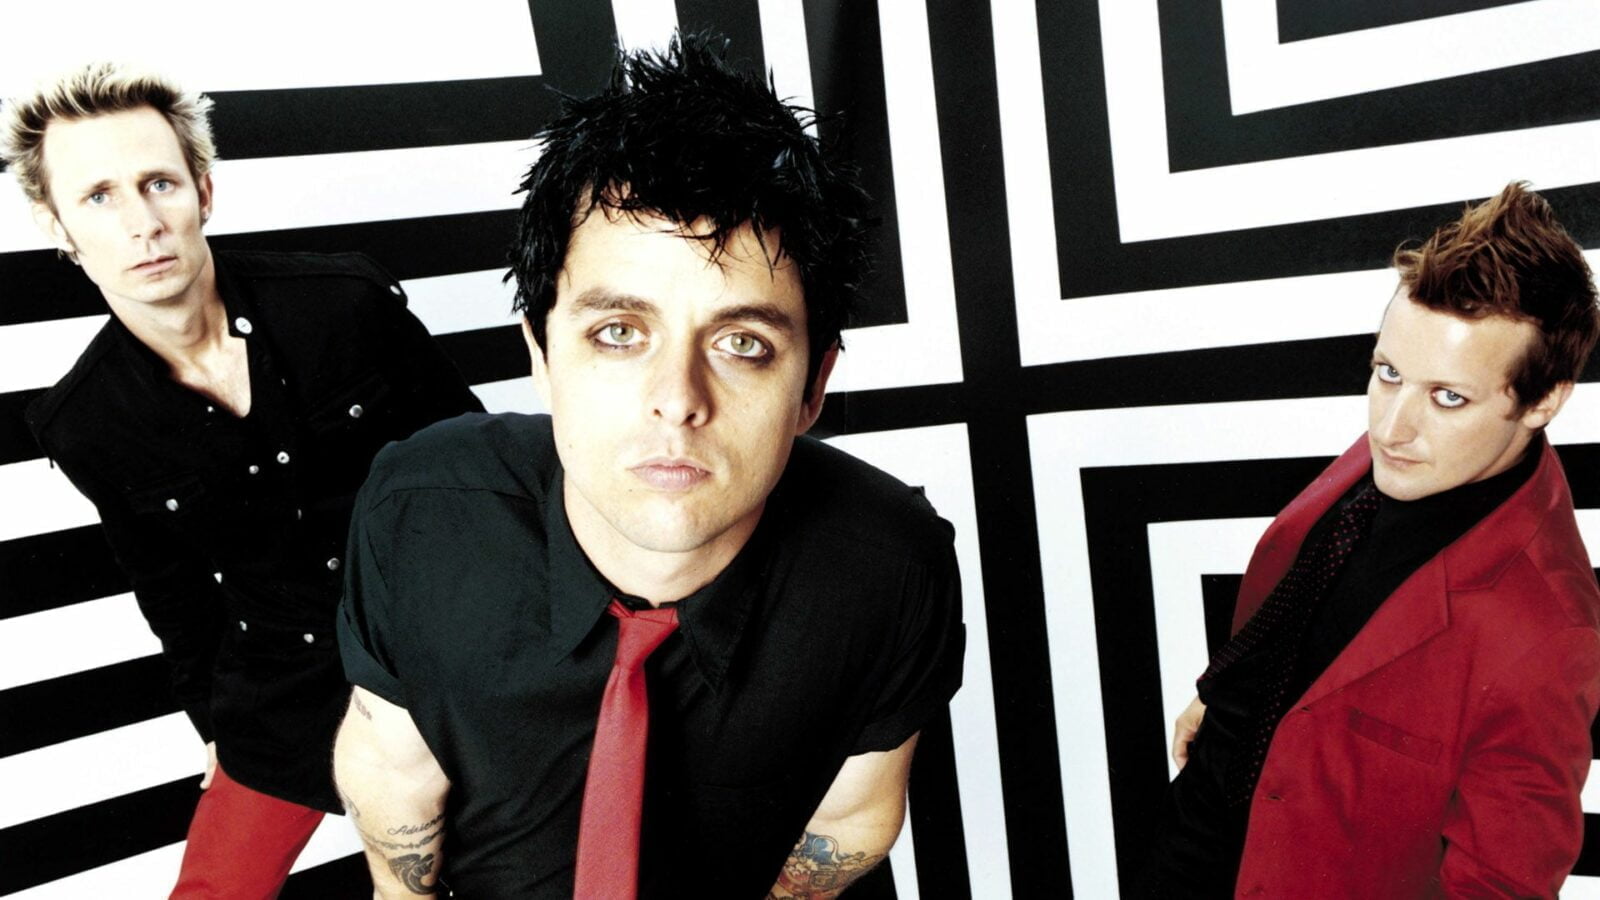 Saviors Green Day